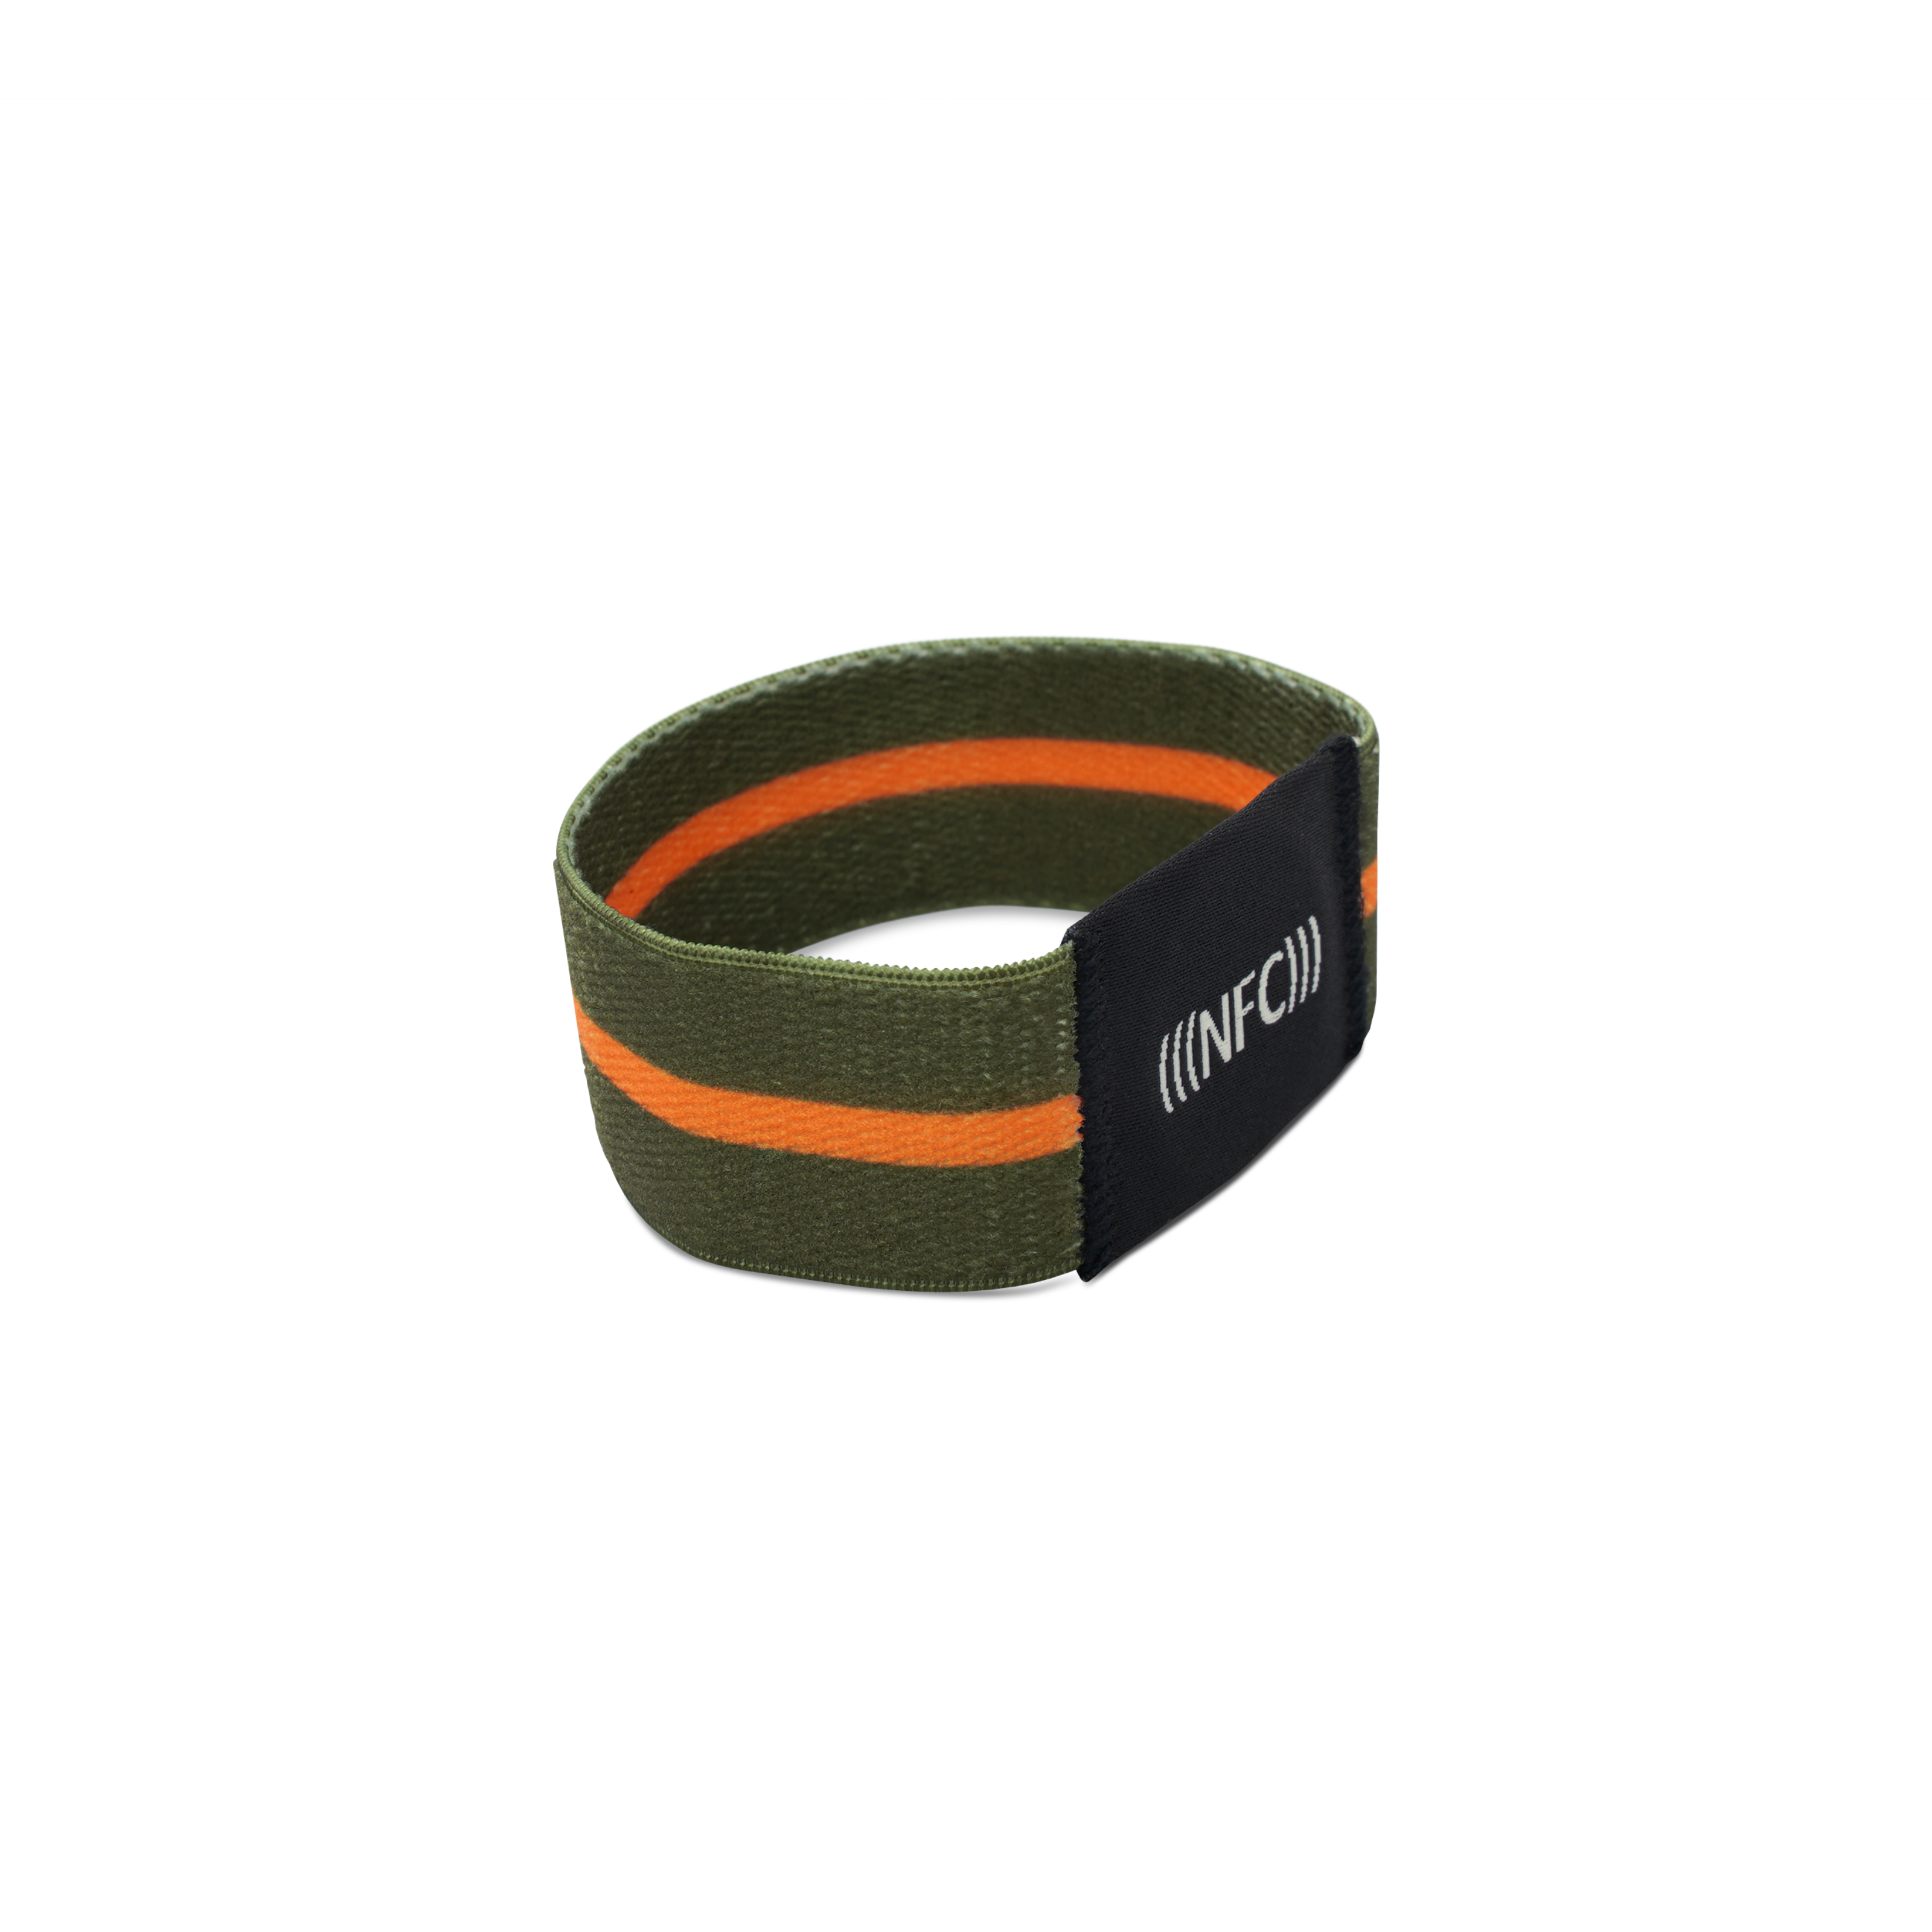 NFC Armband Stoff - 170 x 25 mm - NTAG216 - 924 Byte - grün - Größe S - Durchmesser 54 mm